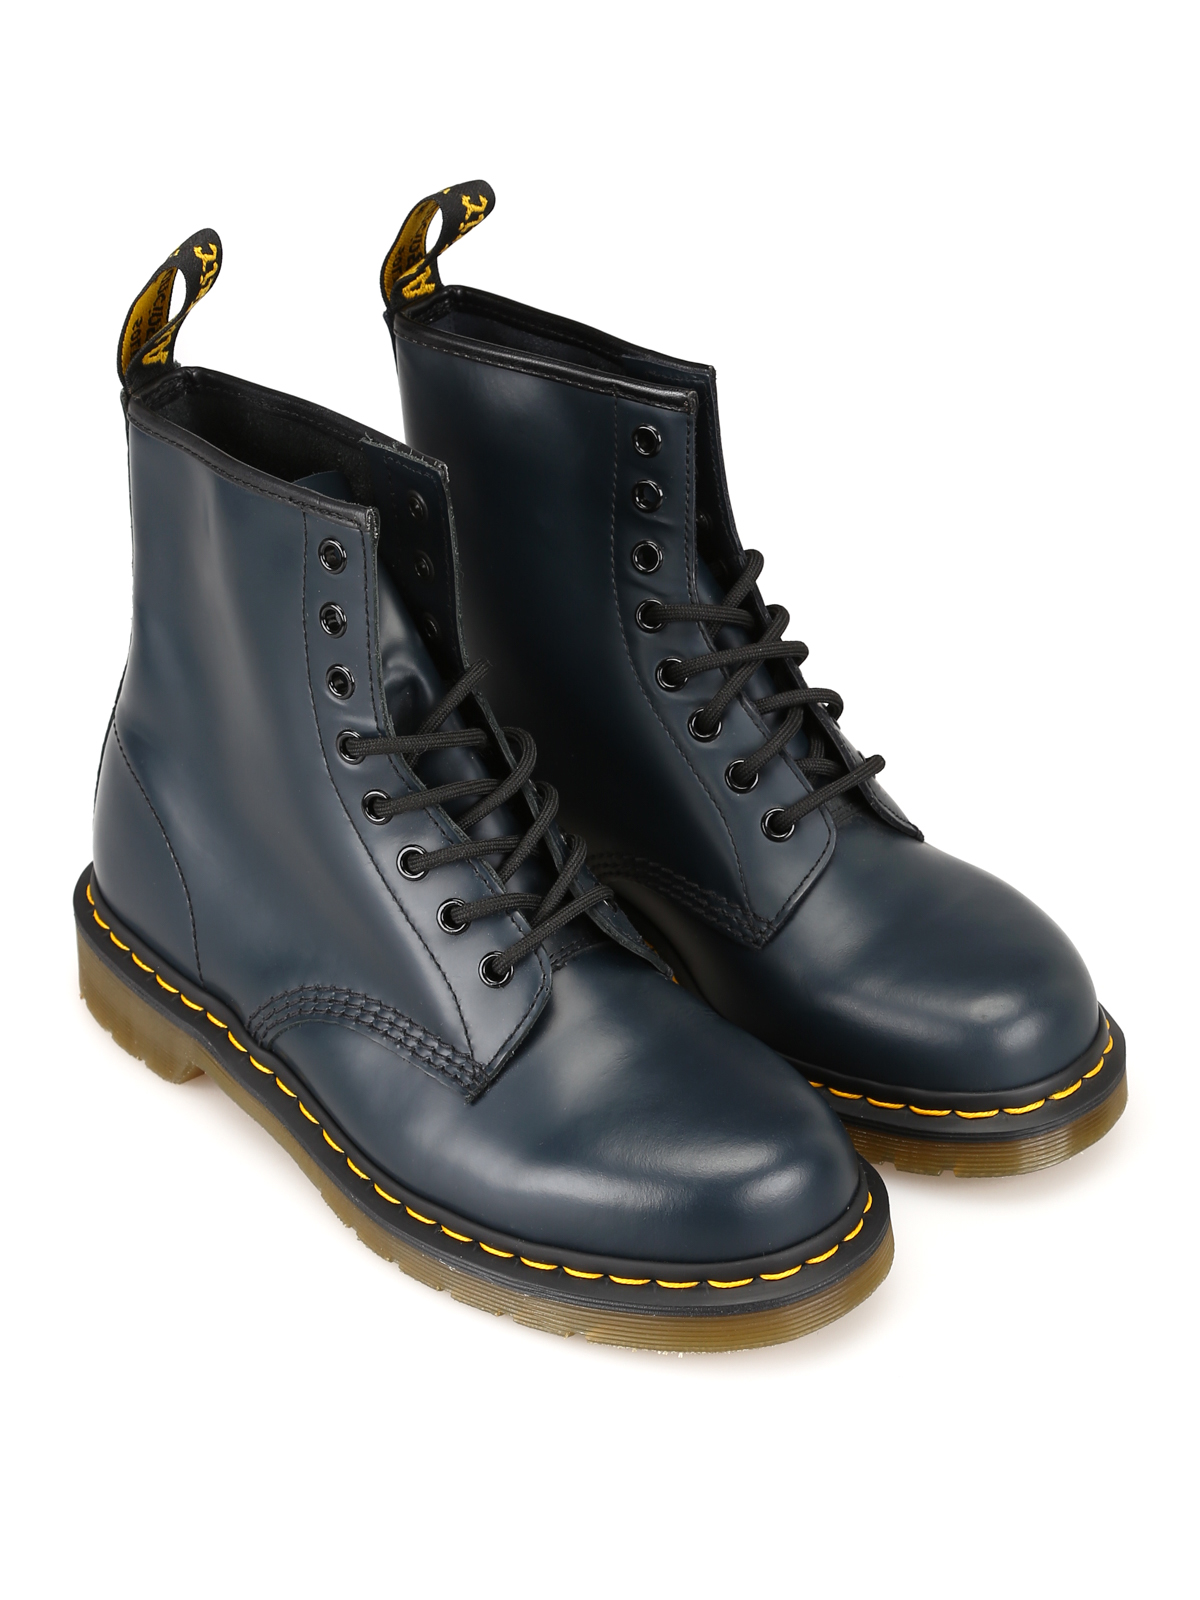 navy boots online